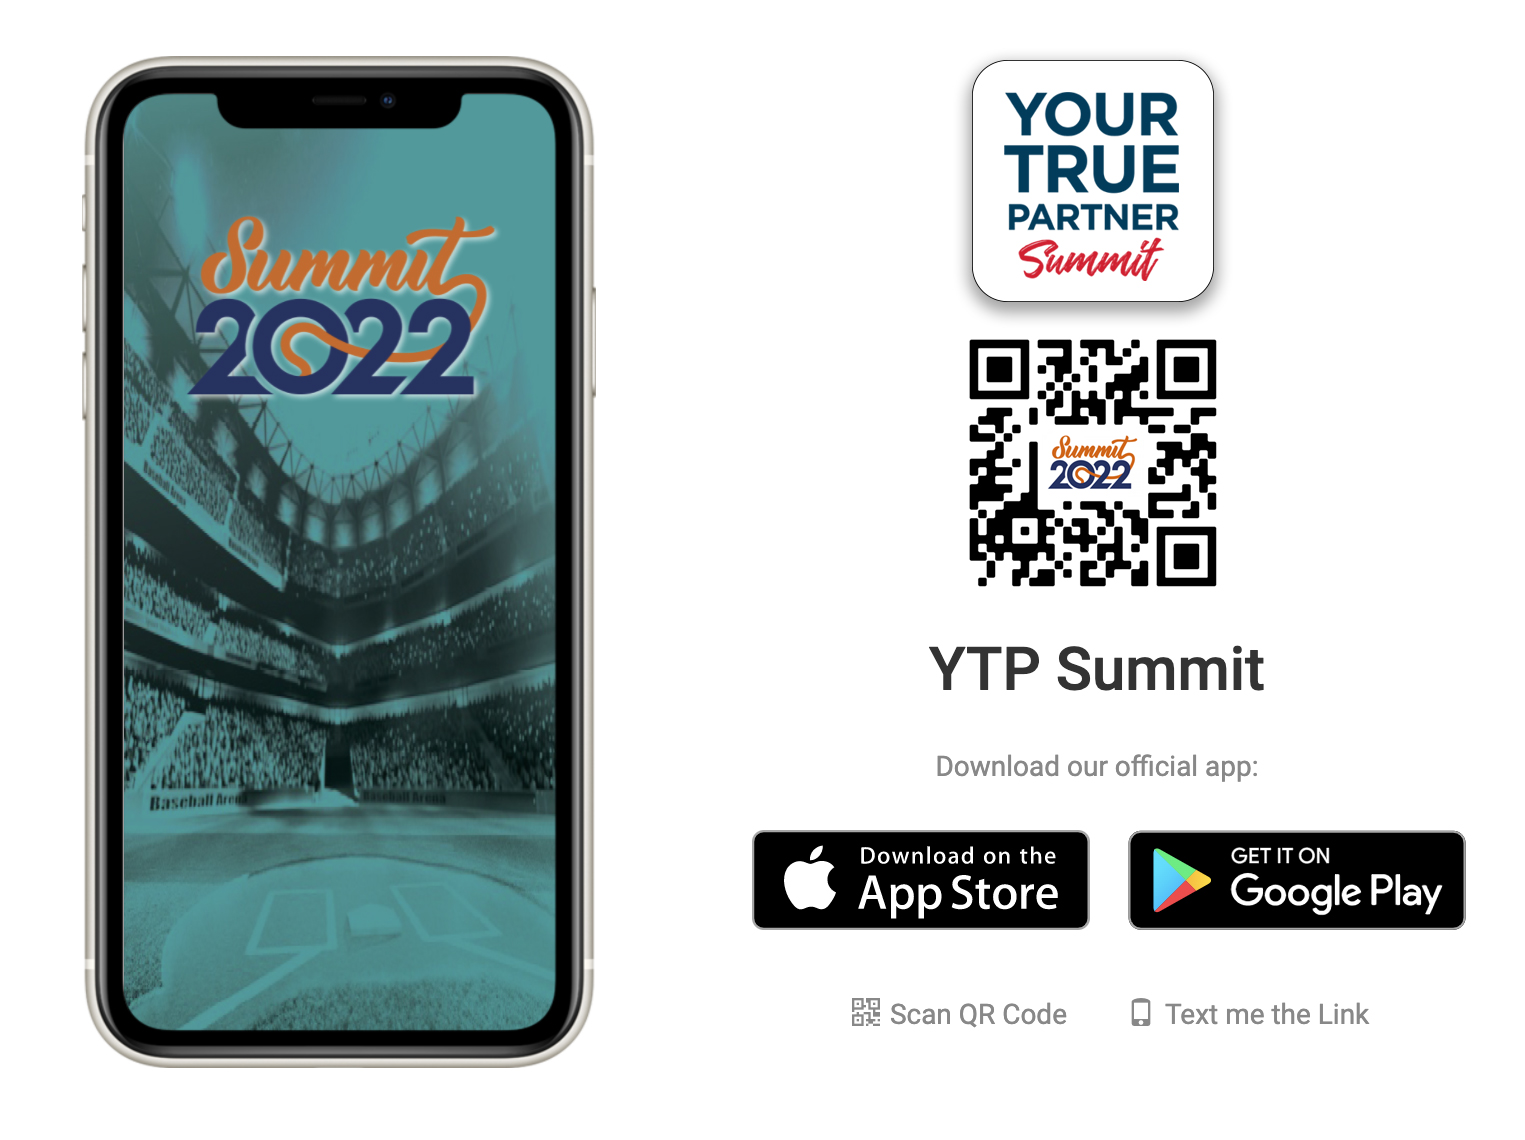 Summit 2022 | The Field of American Dreams